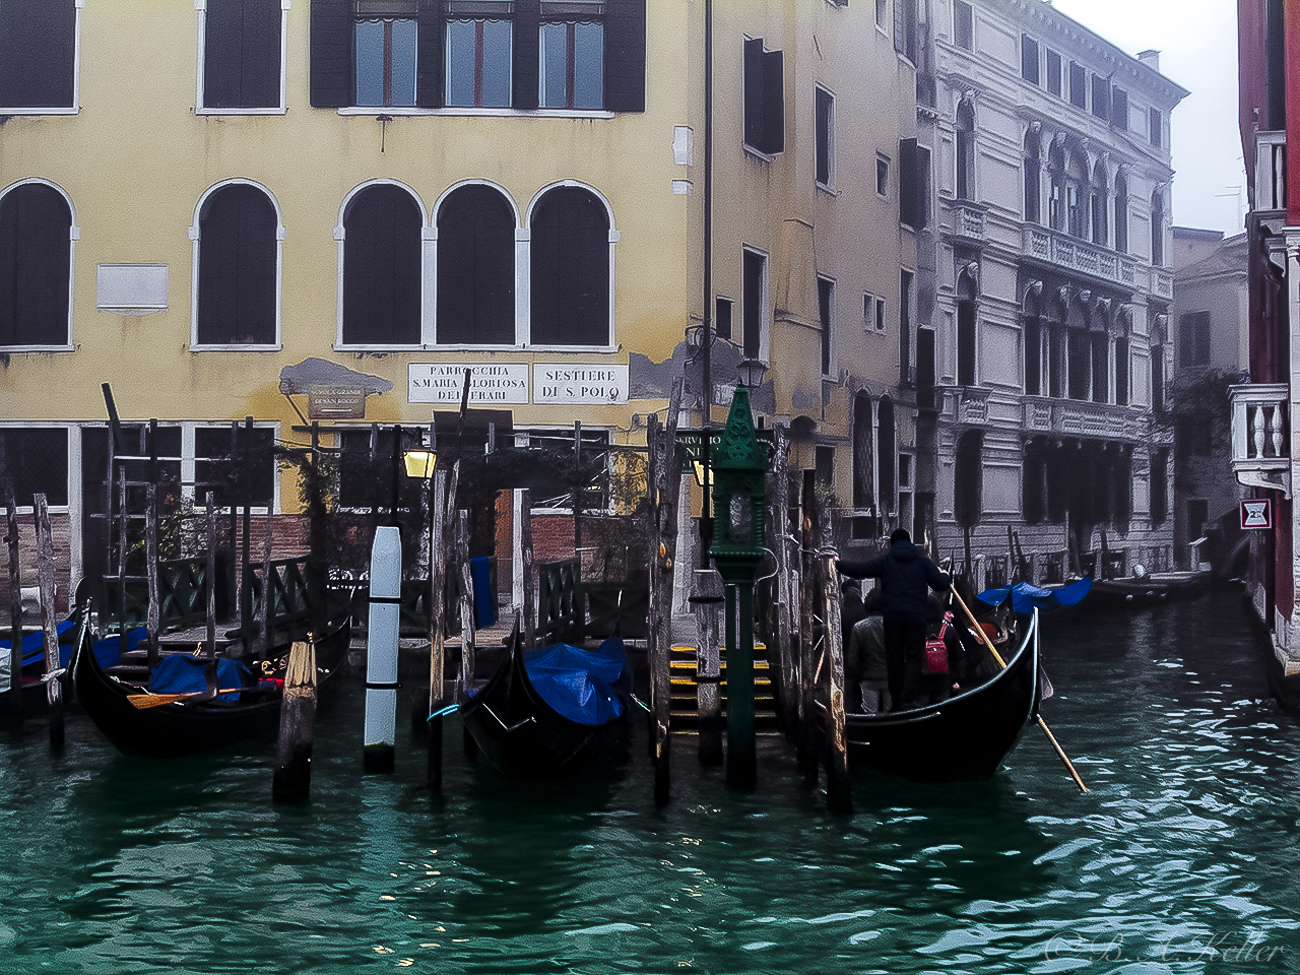 Arrival in Venice